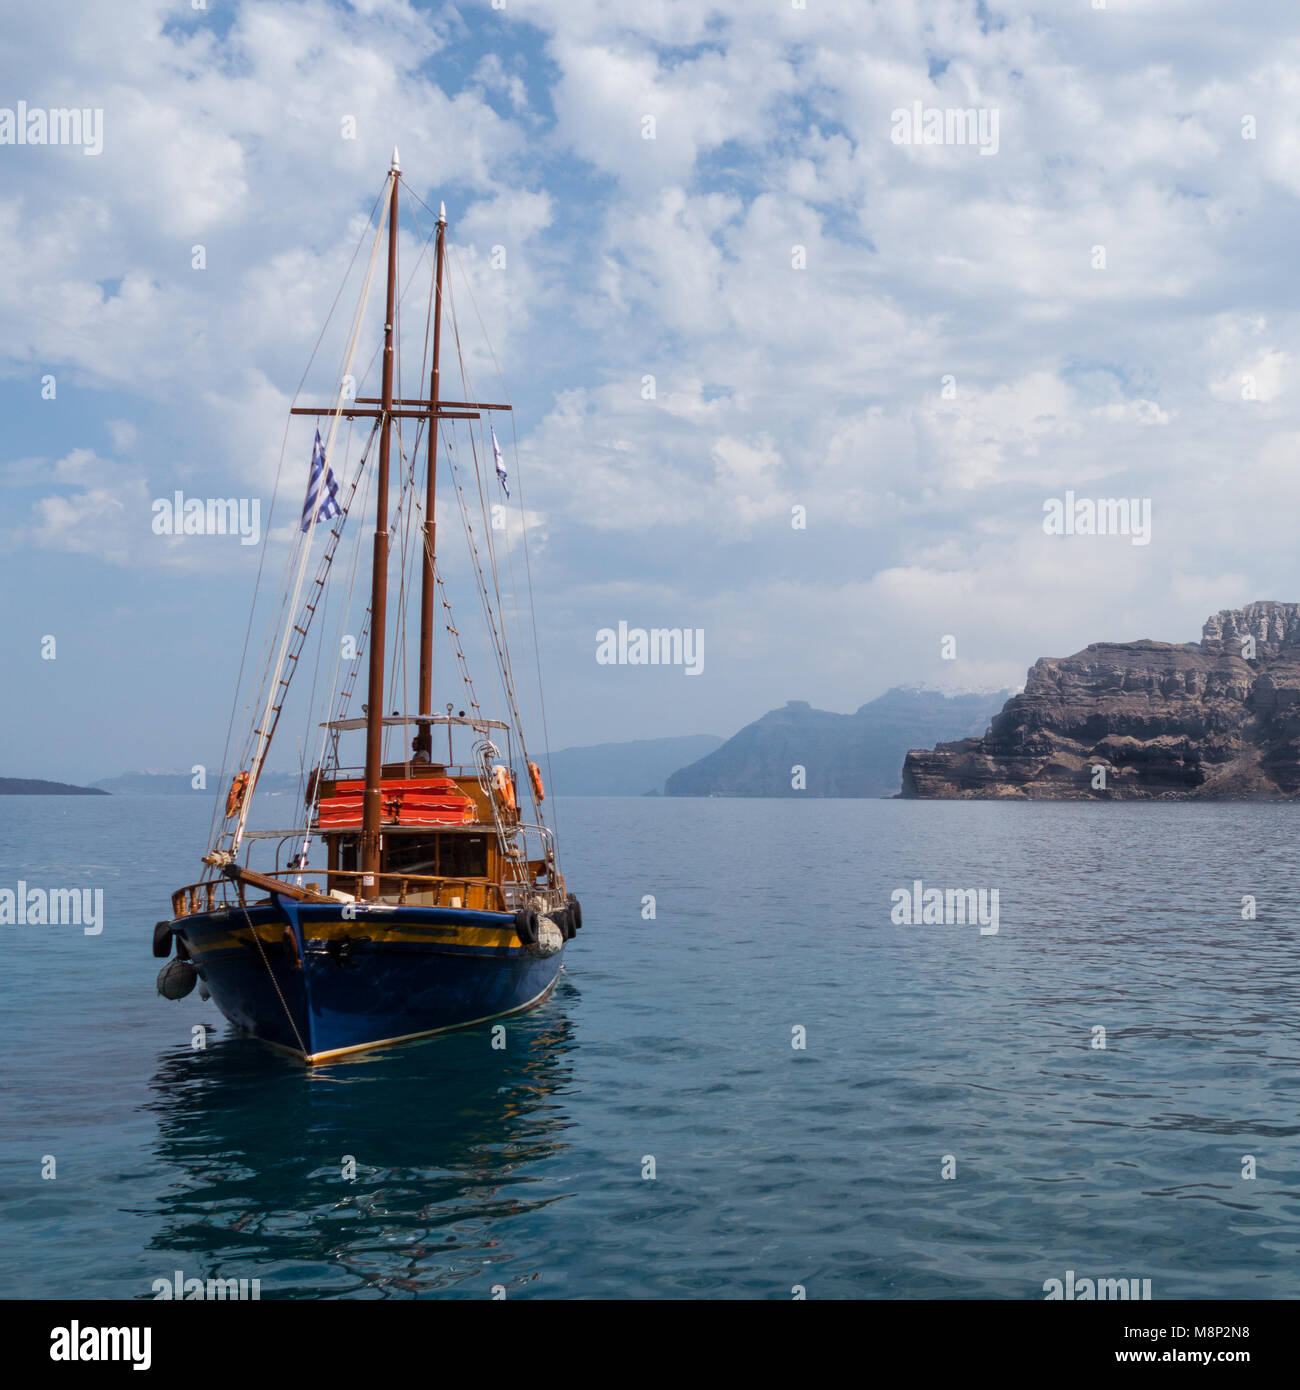 a small boat on the water in the caldera of santorini island, greece Stock Photo